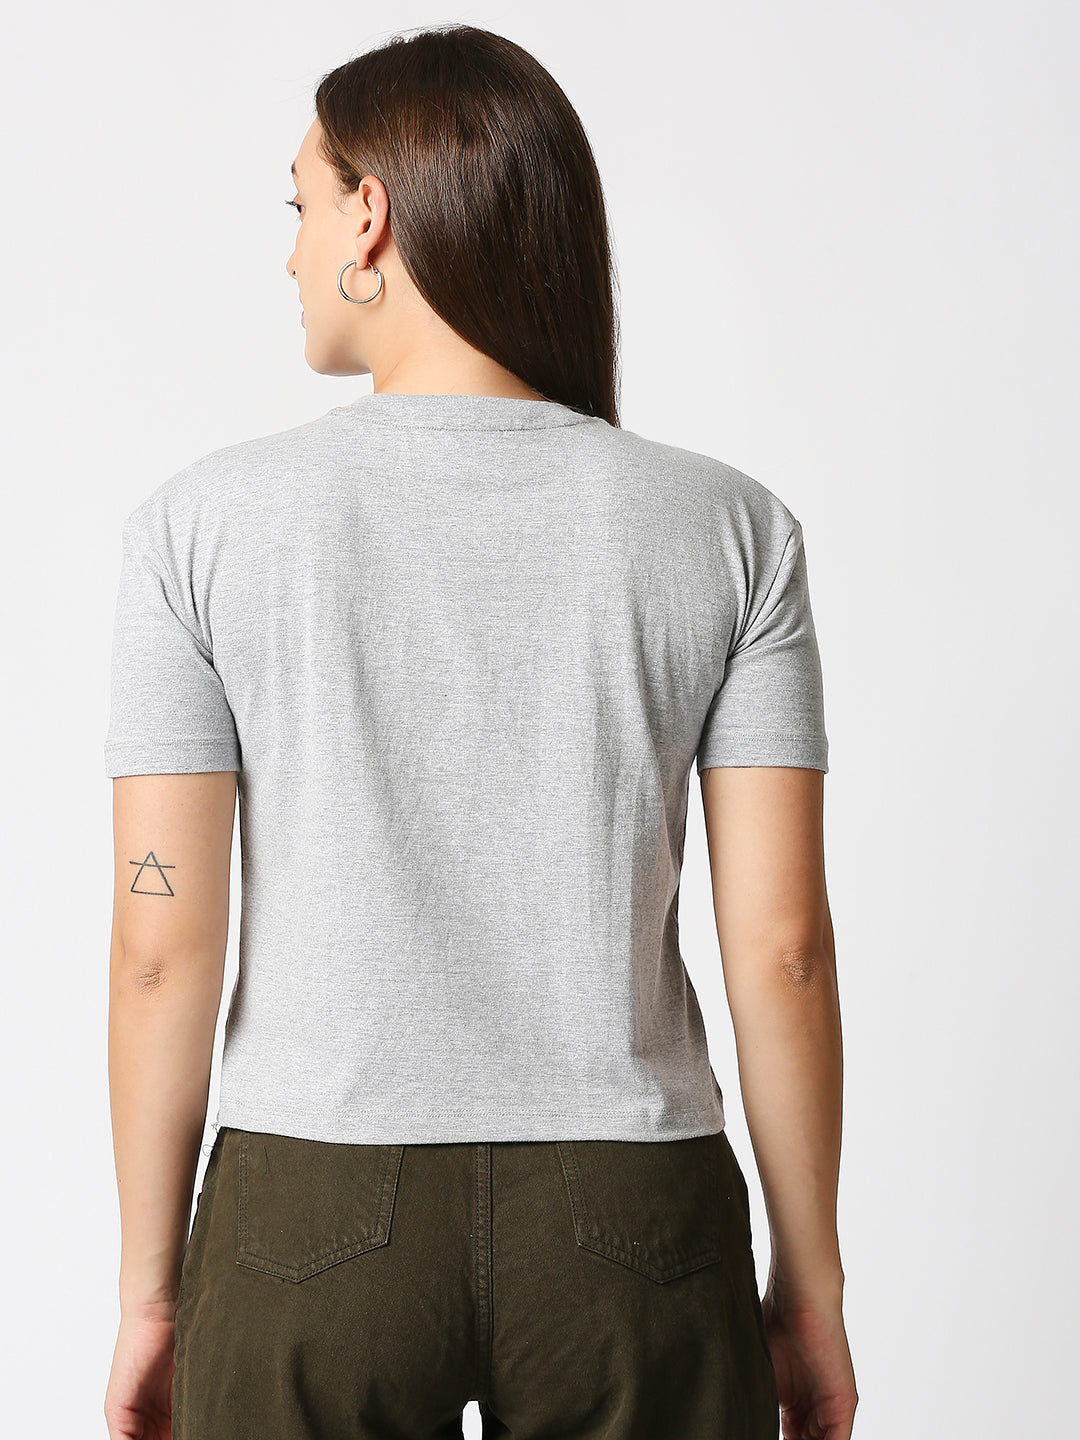 Buy Women's Short Top Chest Print Grey melange T-shirt